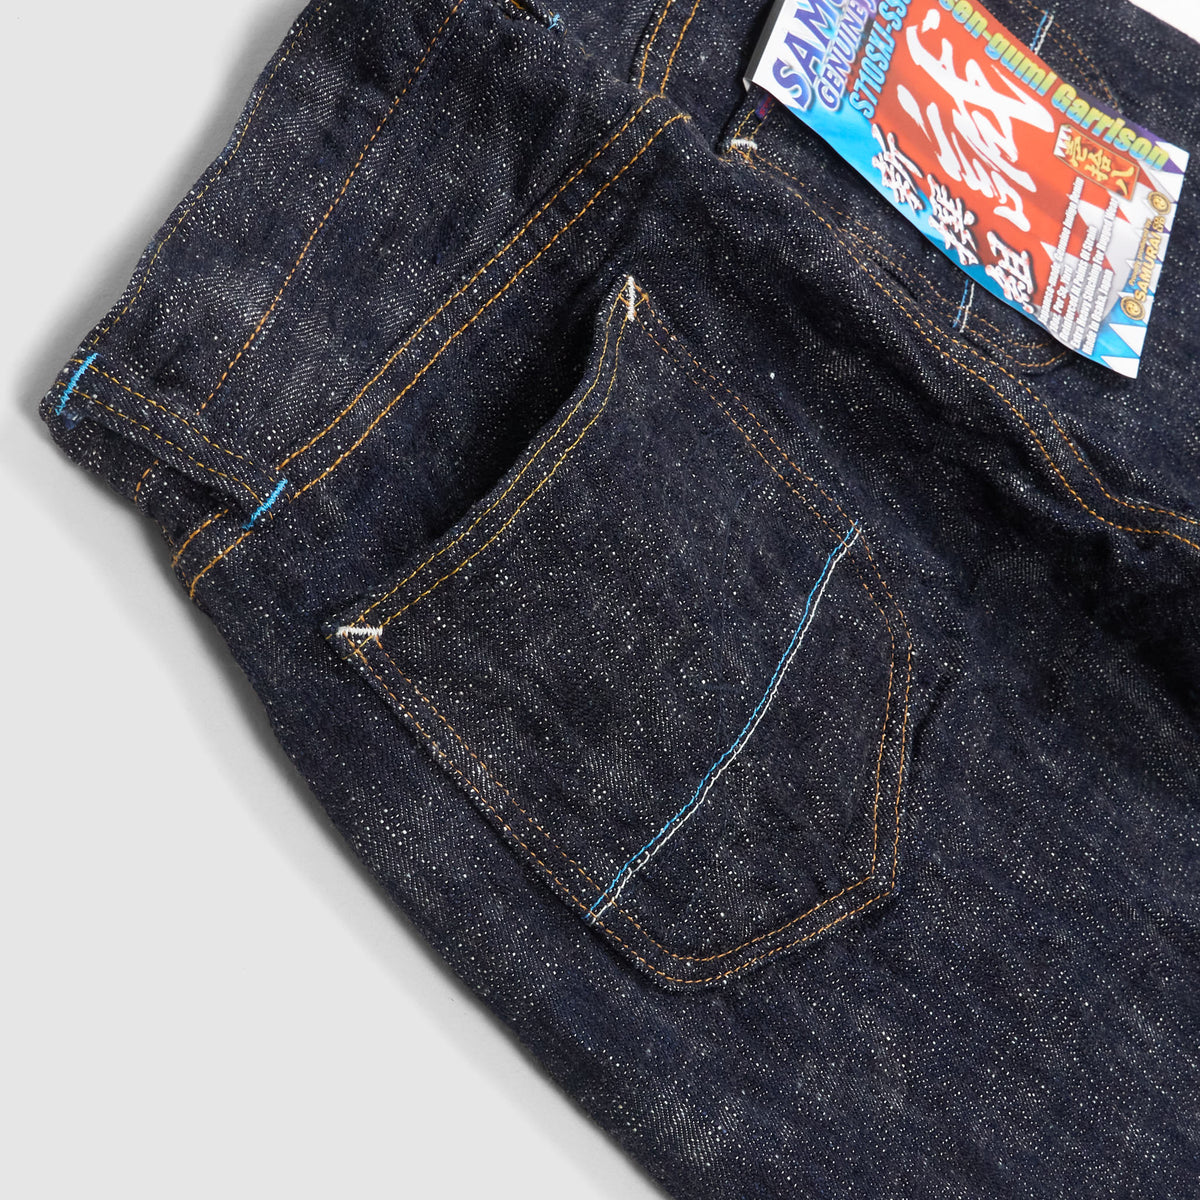 Samurai Jeans Limited «Shinsen-Gumi» Series 18oz Slub Makoto Selvage Denim